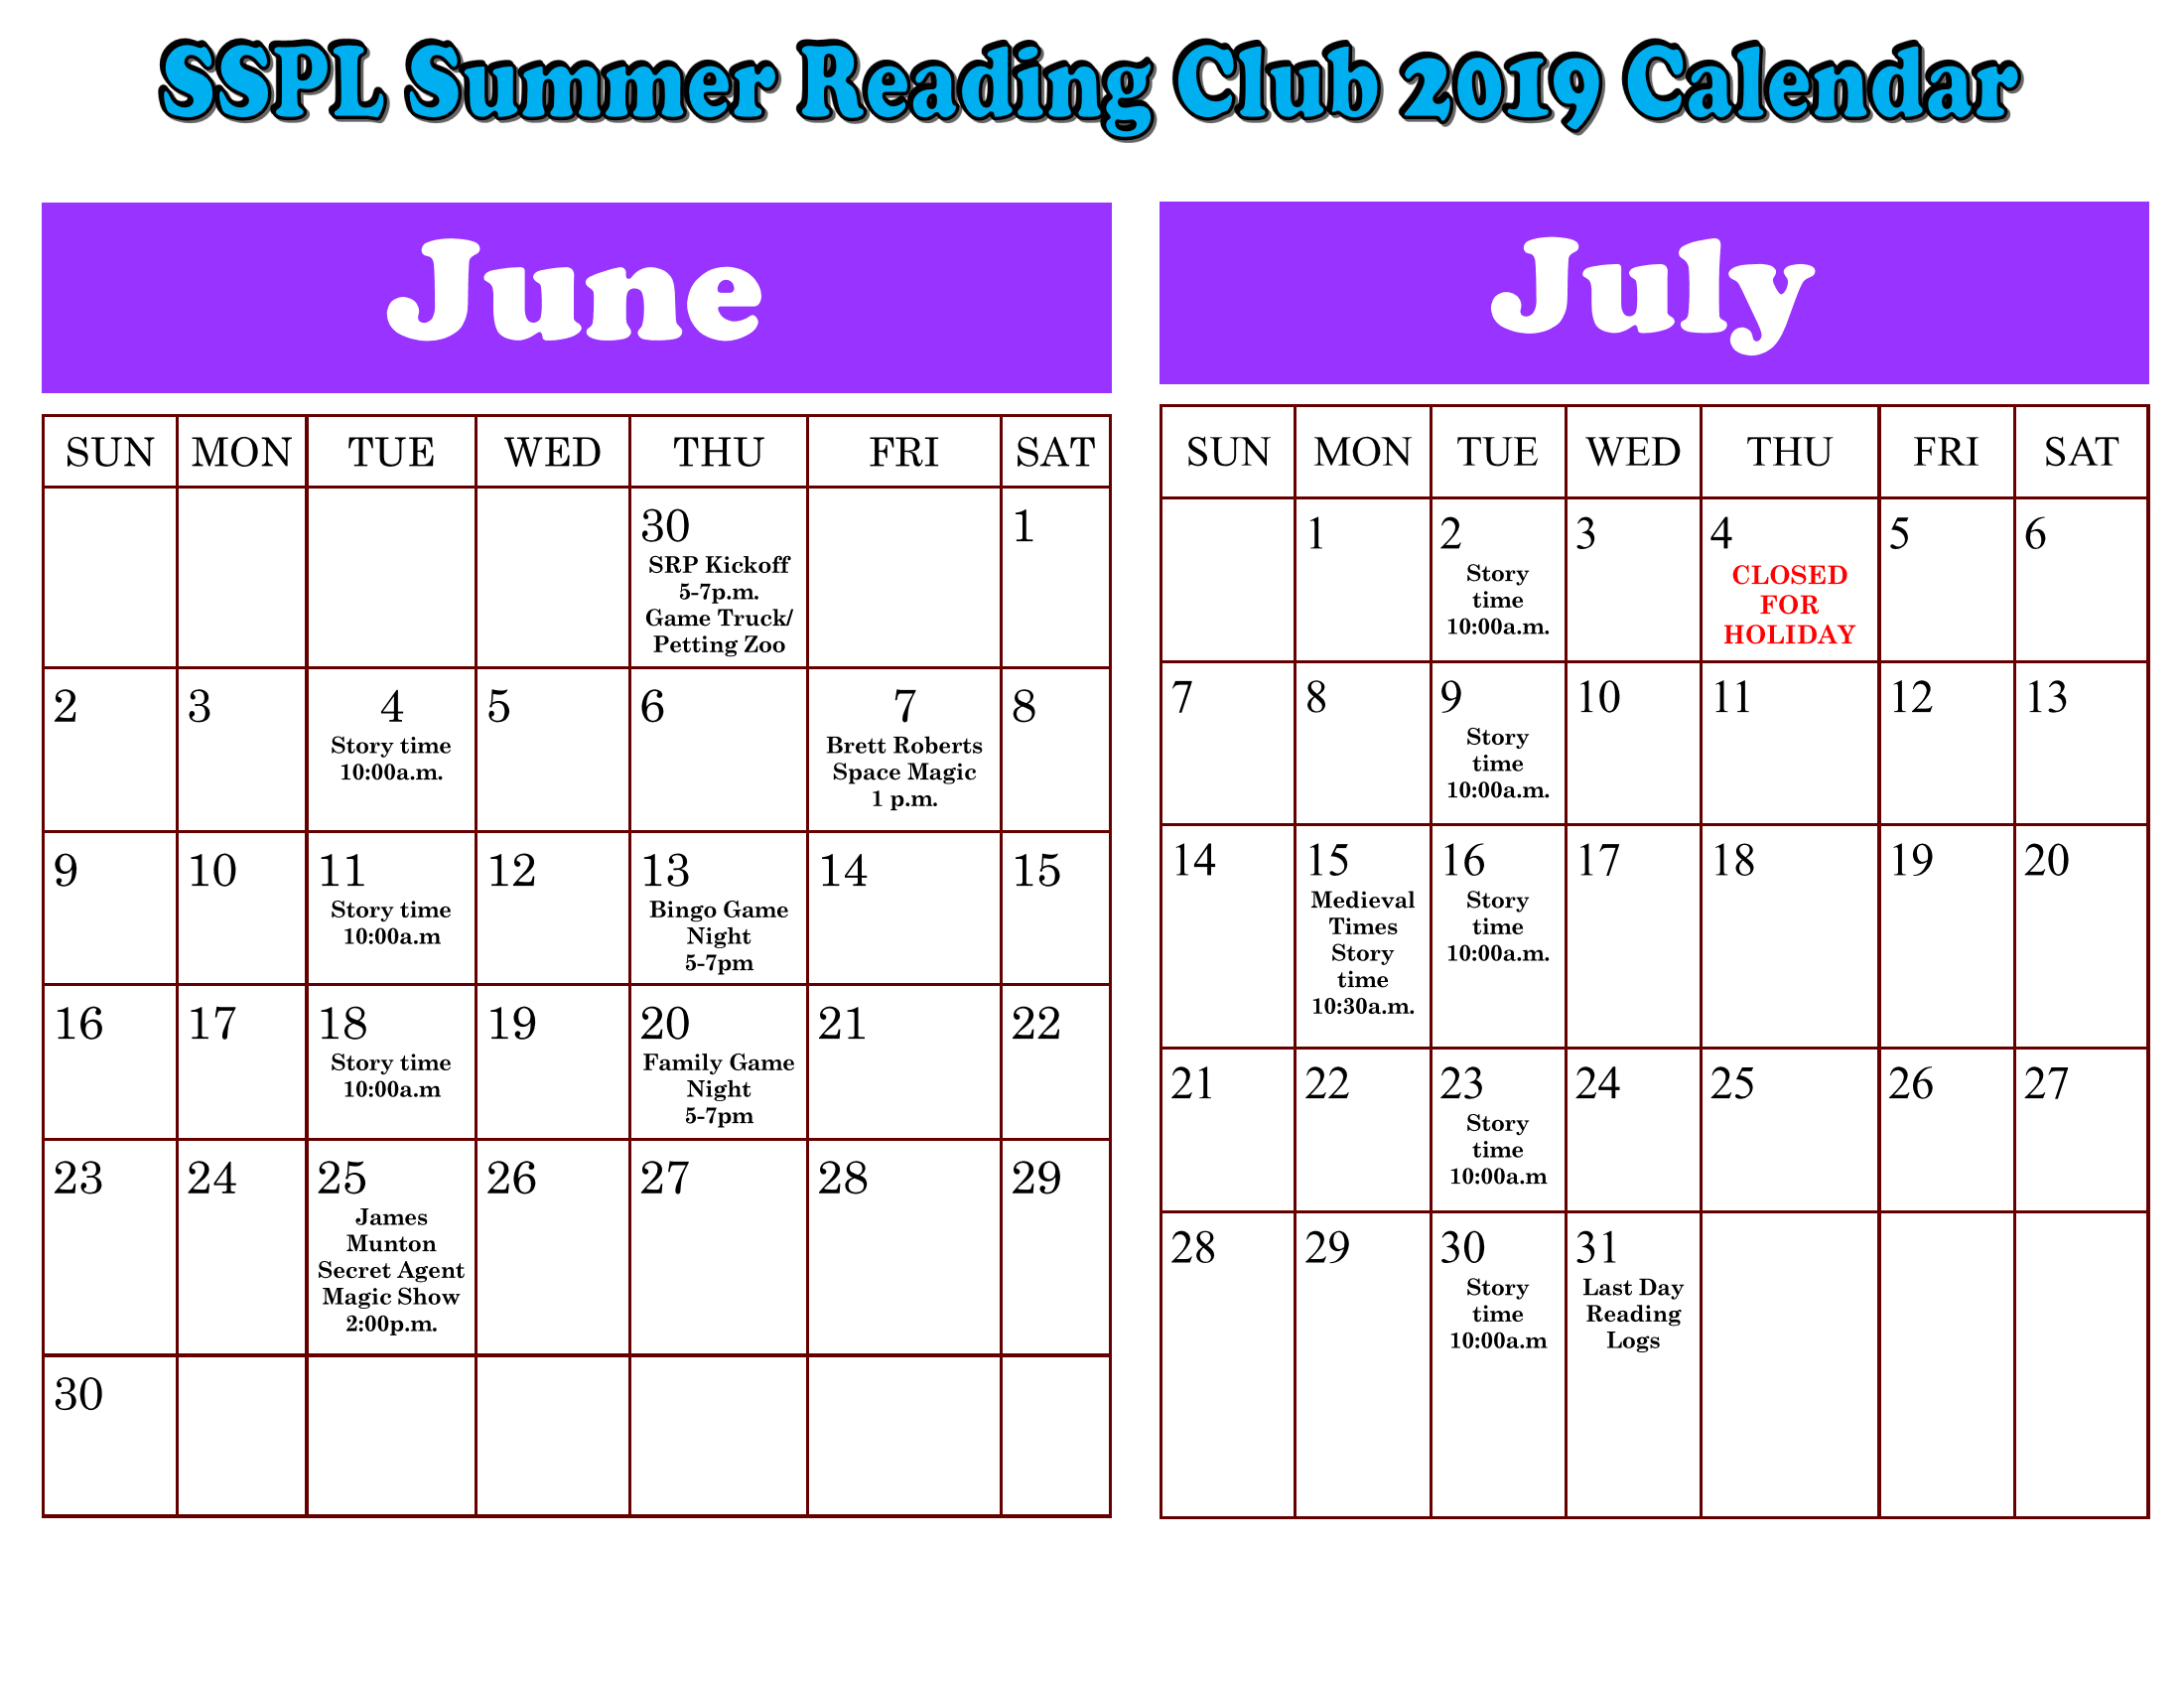 Summer Reading Program at Sulphur Springs Public Library Kicks-Off May 30th and Continues All Summer.